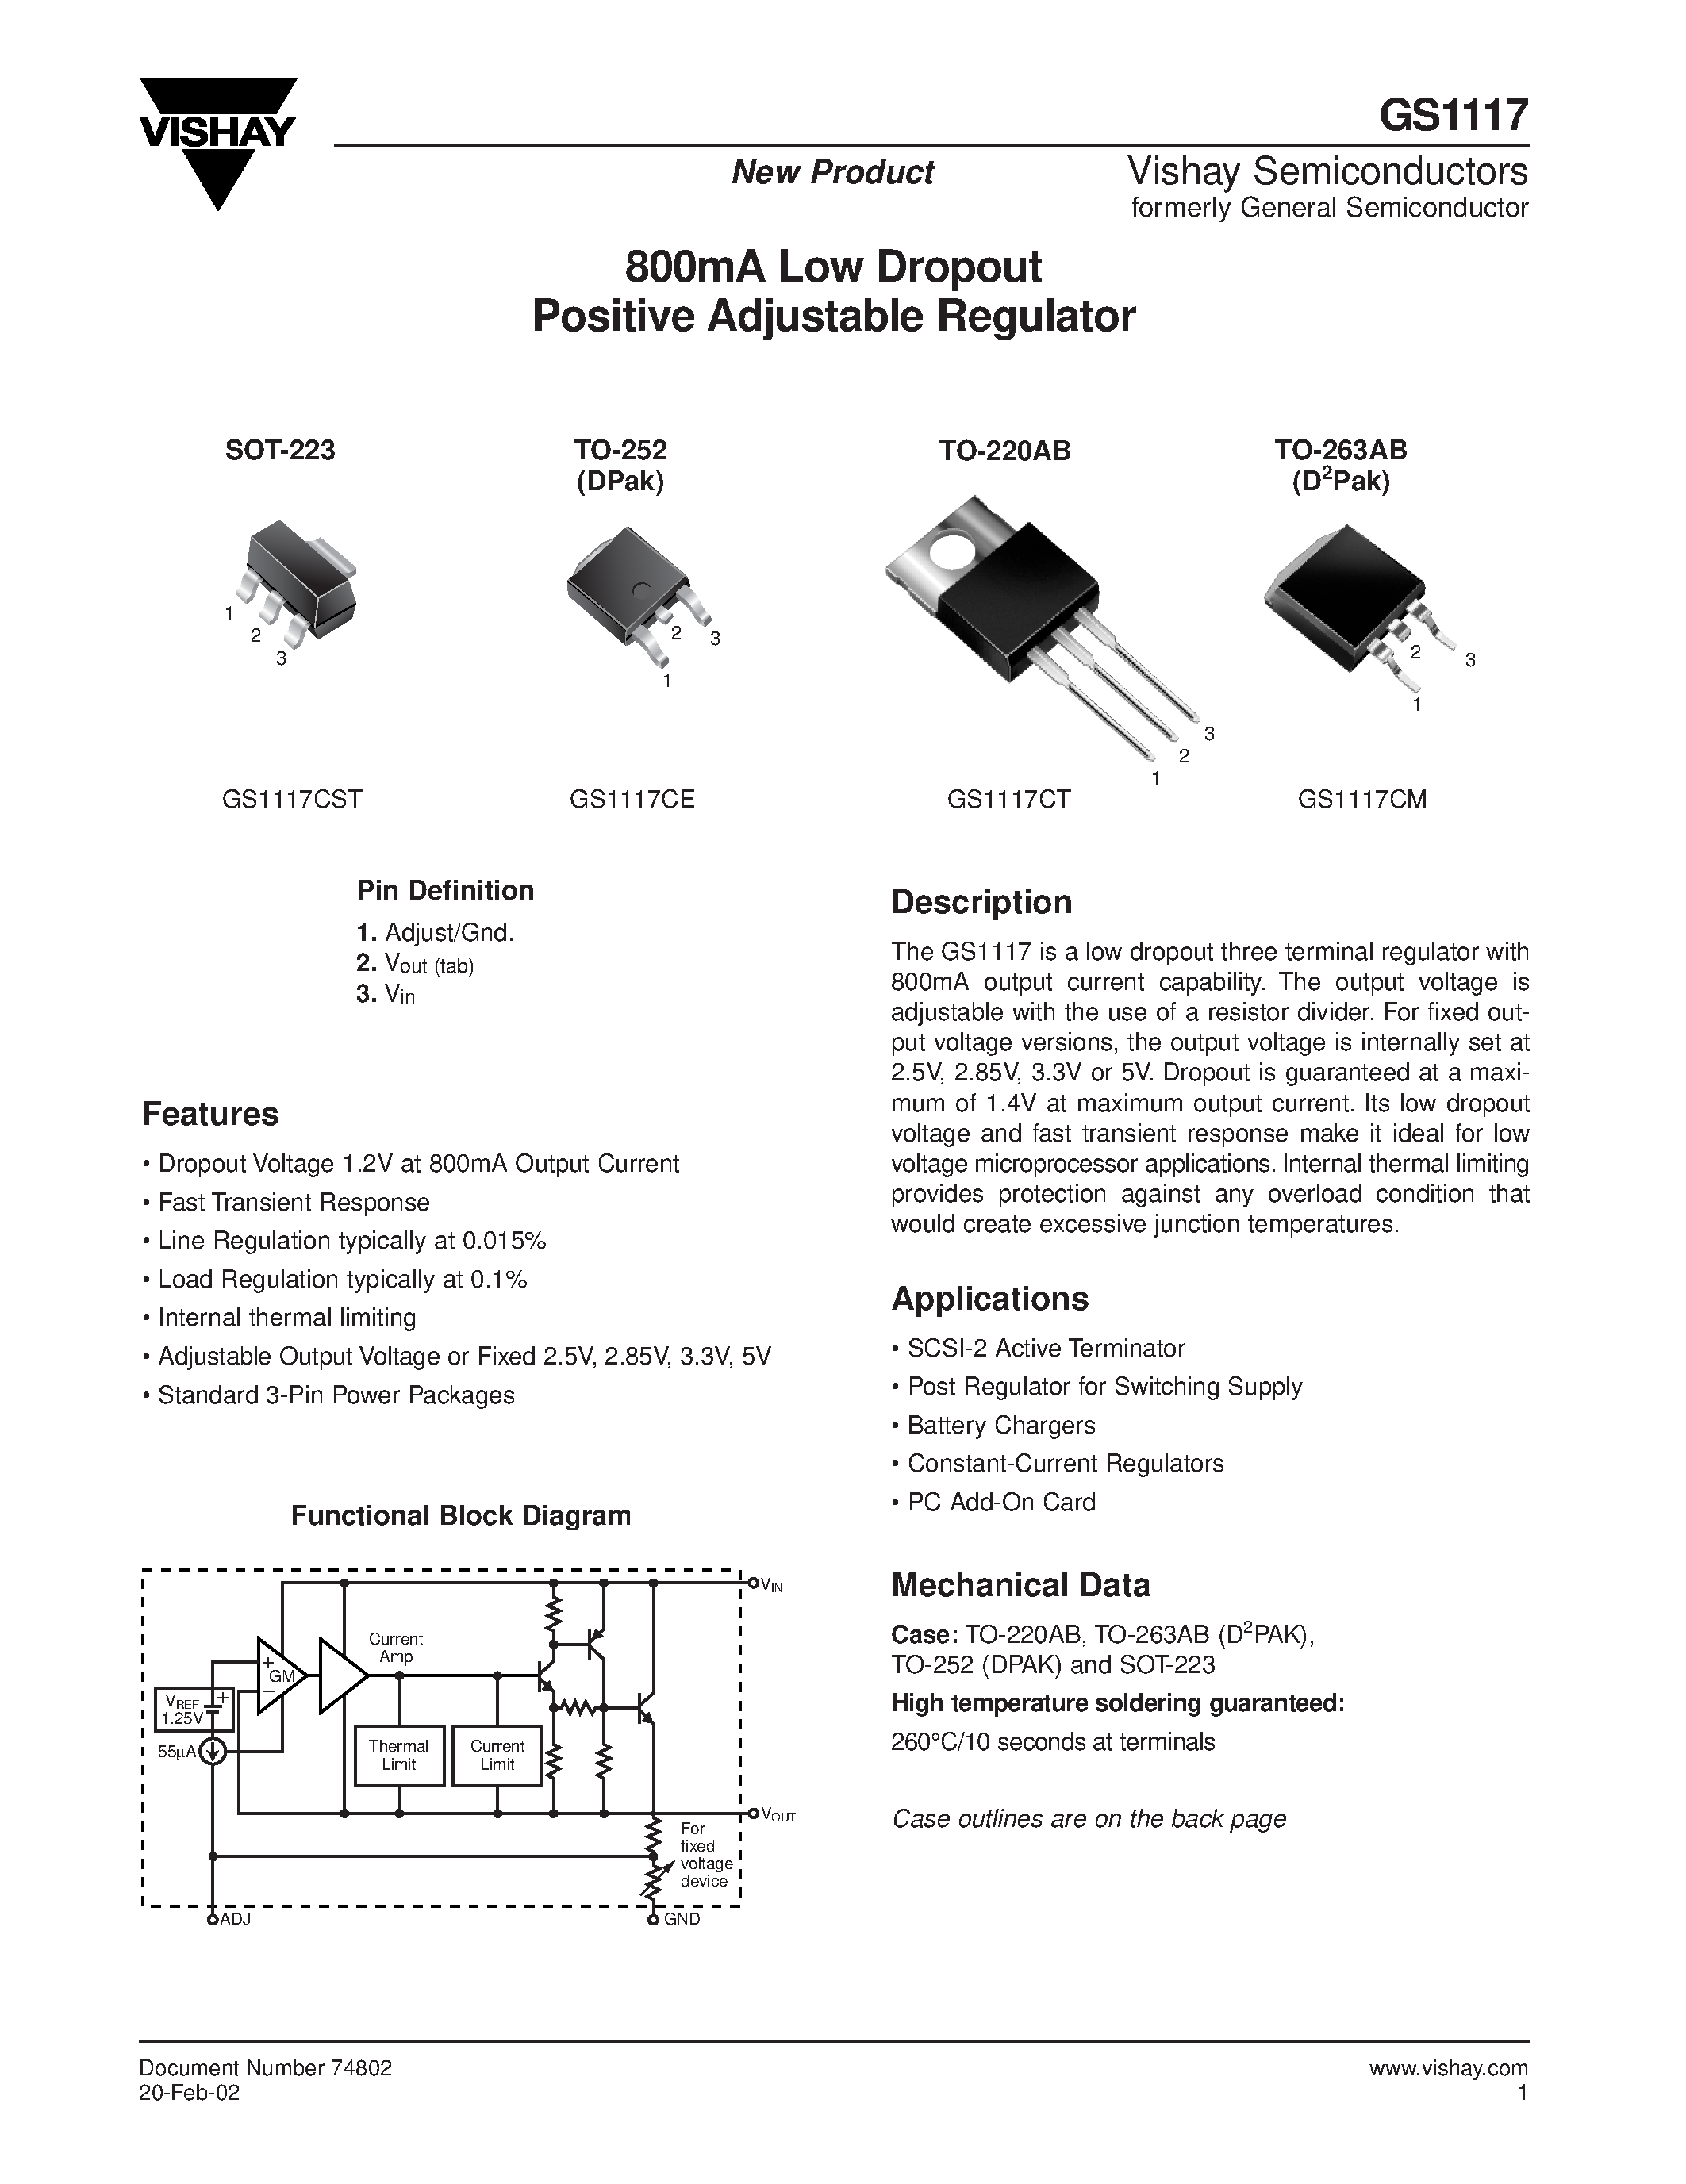 Даташит 74802 - 800mA Low Dropout Positive Adjustable Regulator страница 1